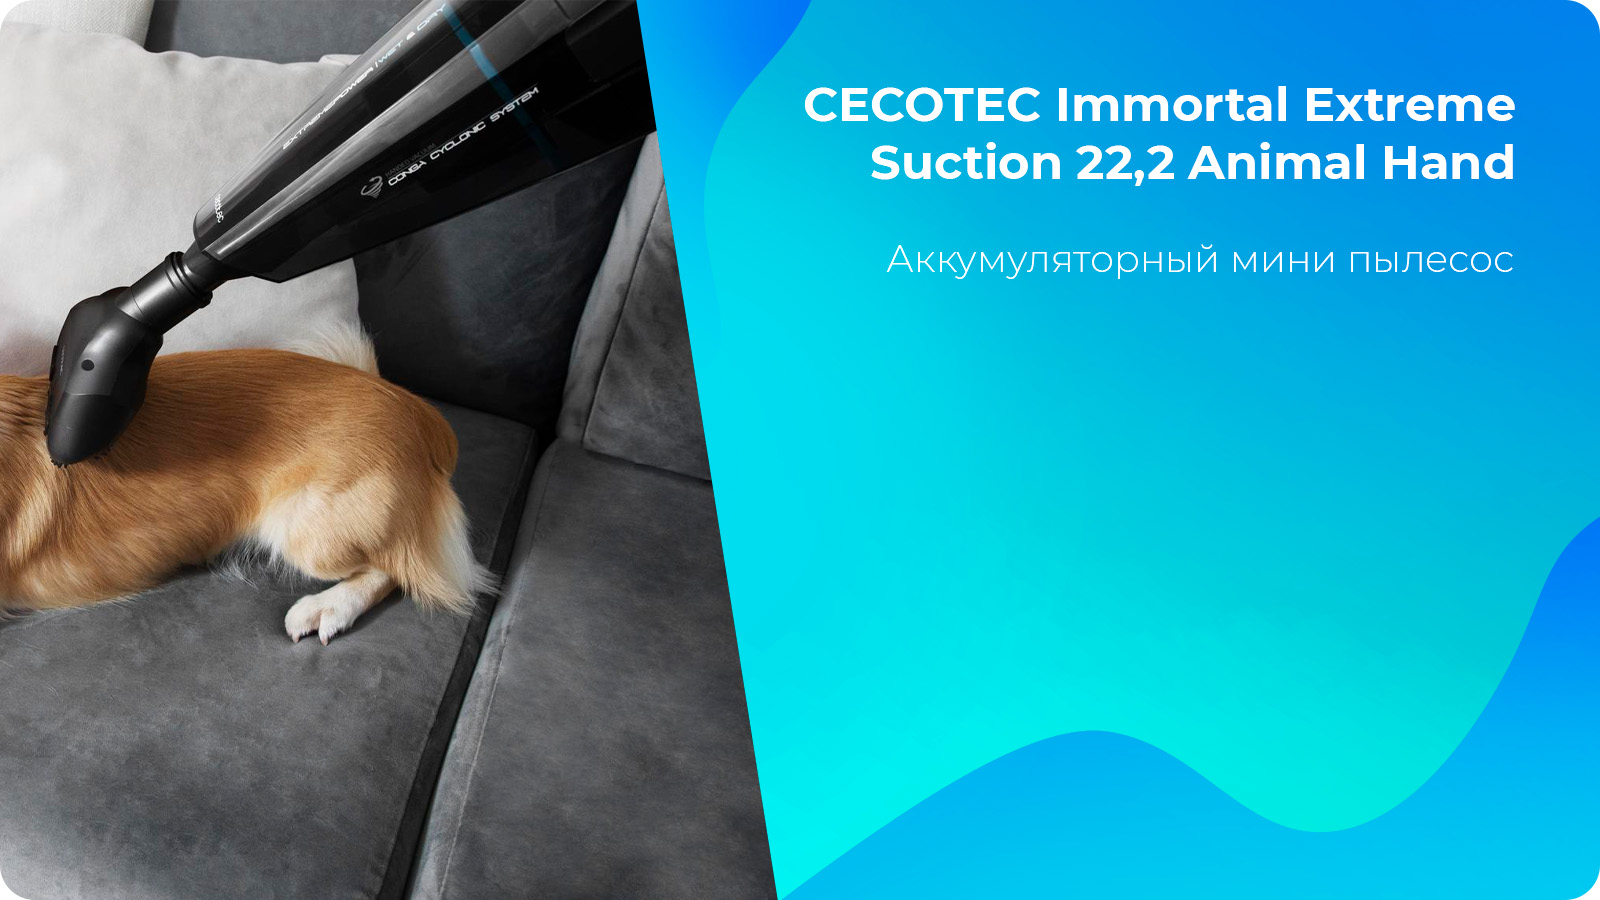 CECOTEC Conga Immortal Extreme
        Suction 22,2 Animal Hand